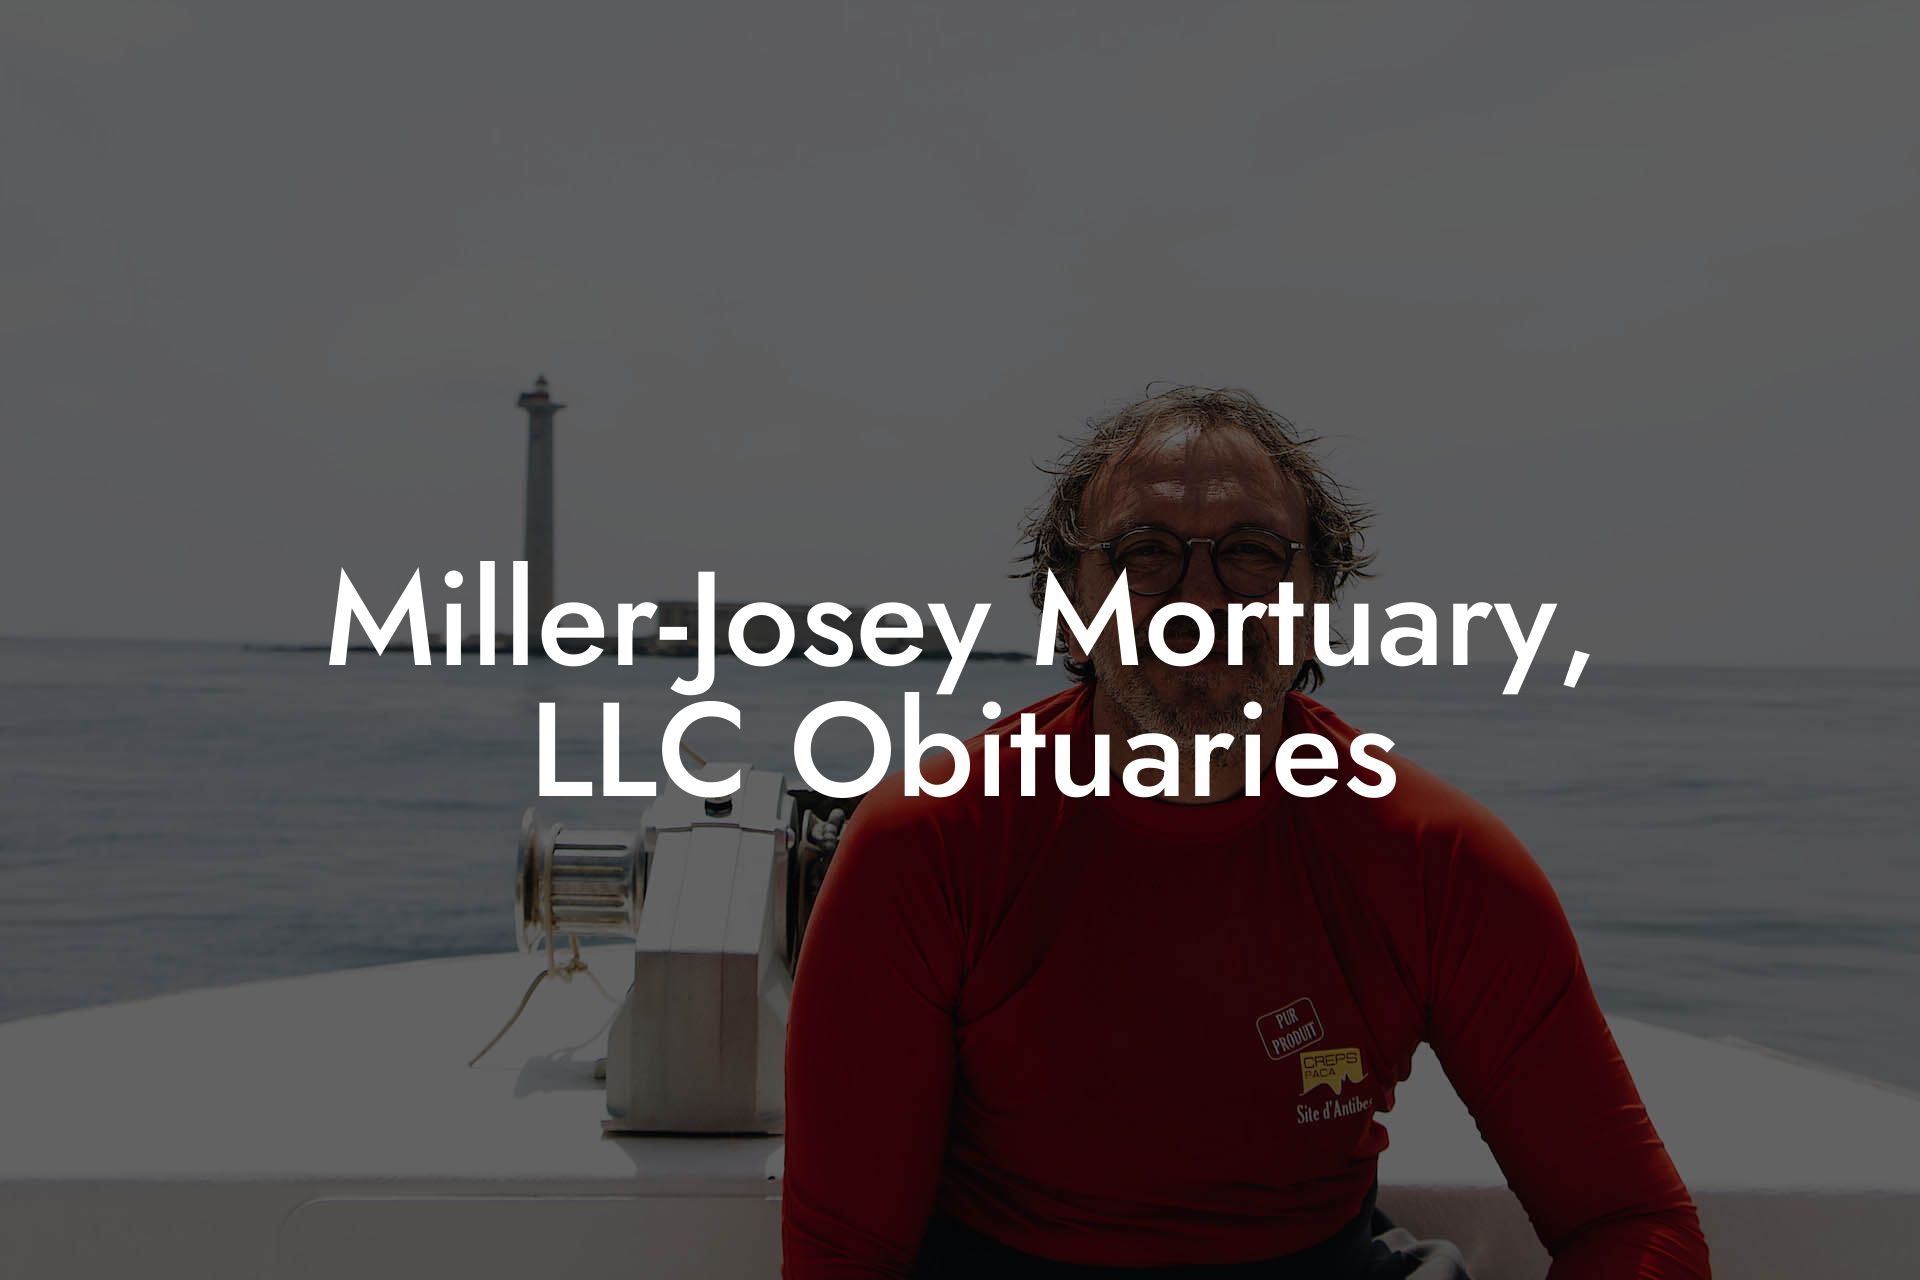 Miller-Josey Mortuary, LLC Obituaries